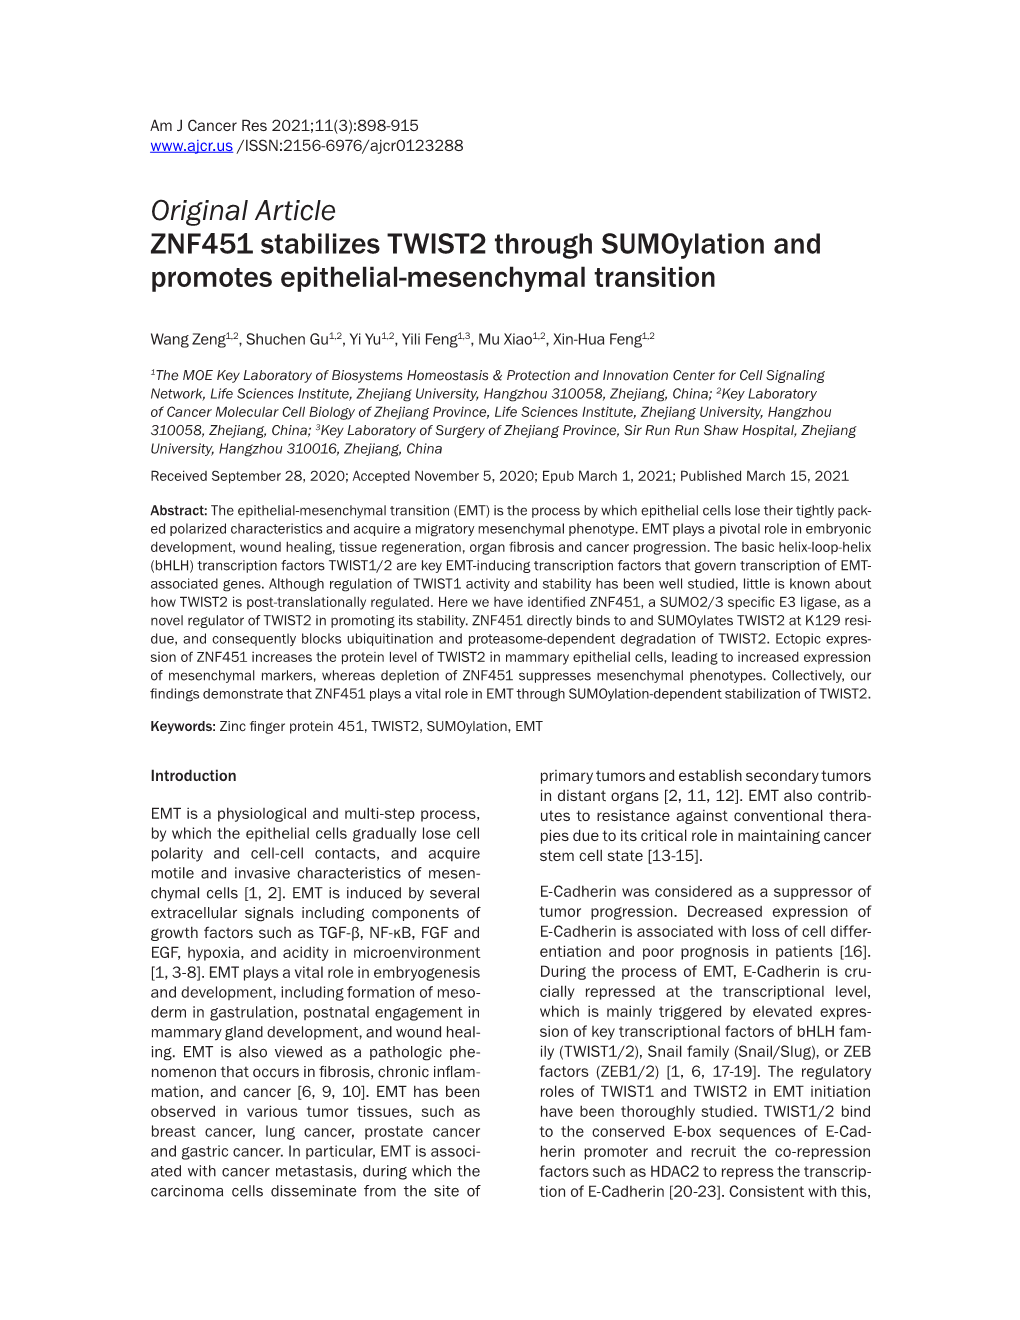 Original Article ZNF451 Stabilizes TWIST2 Through Sumoylation and Promotes Epithelial-Mesenchymal Transition